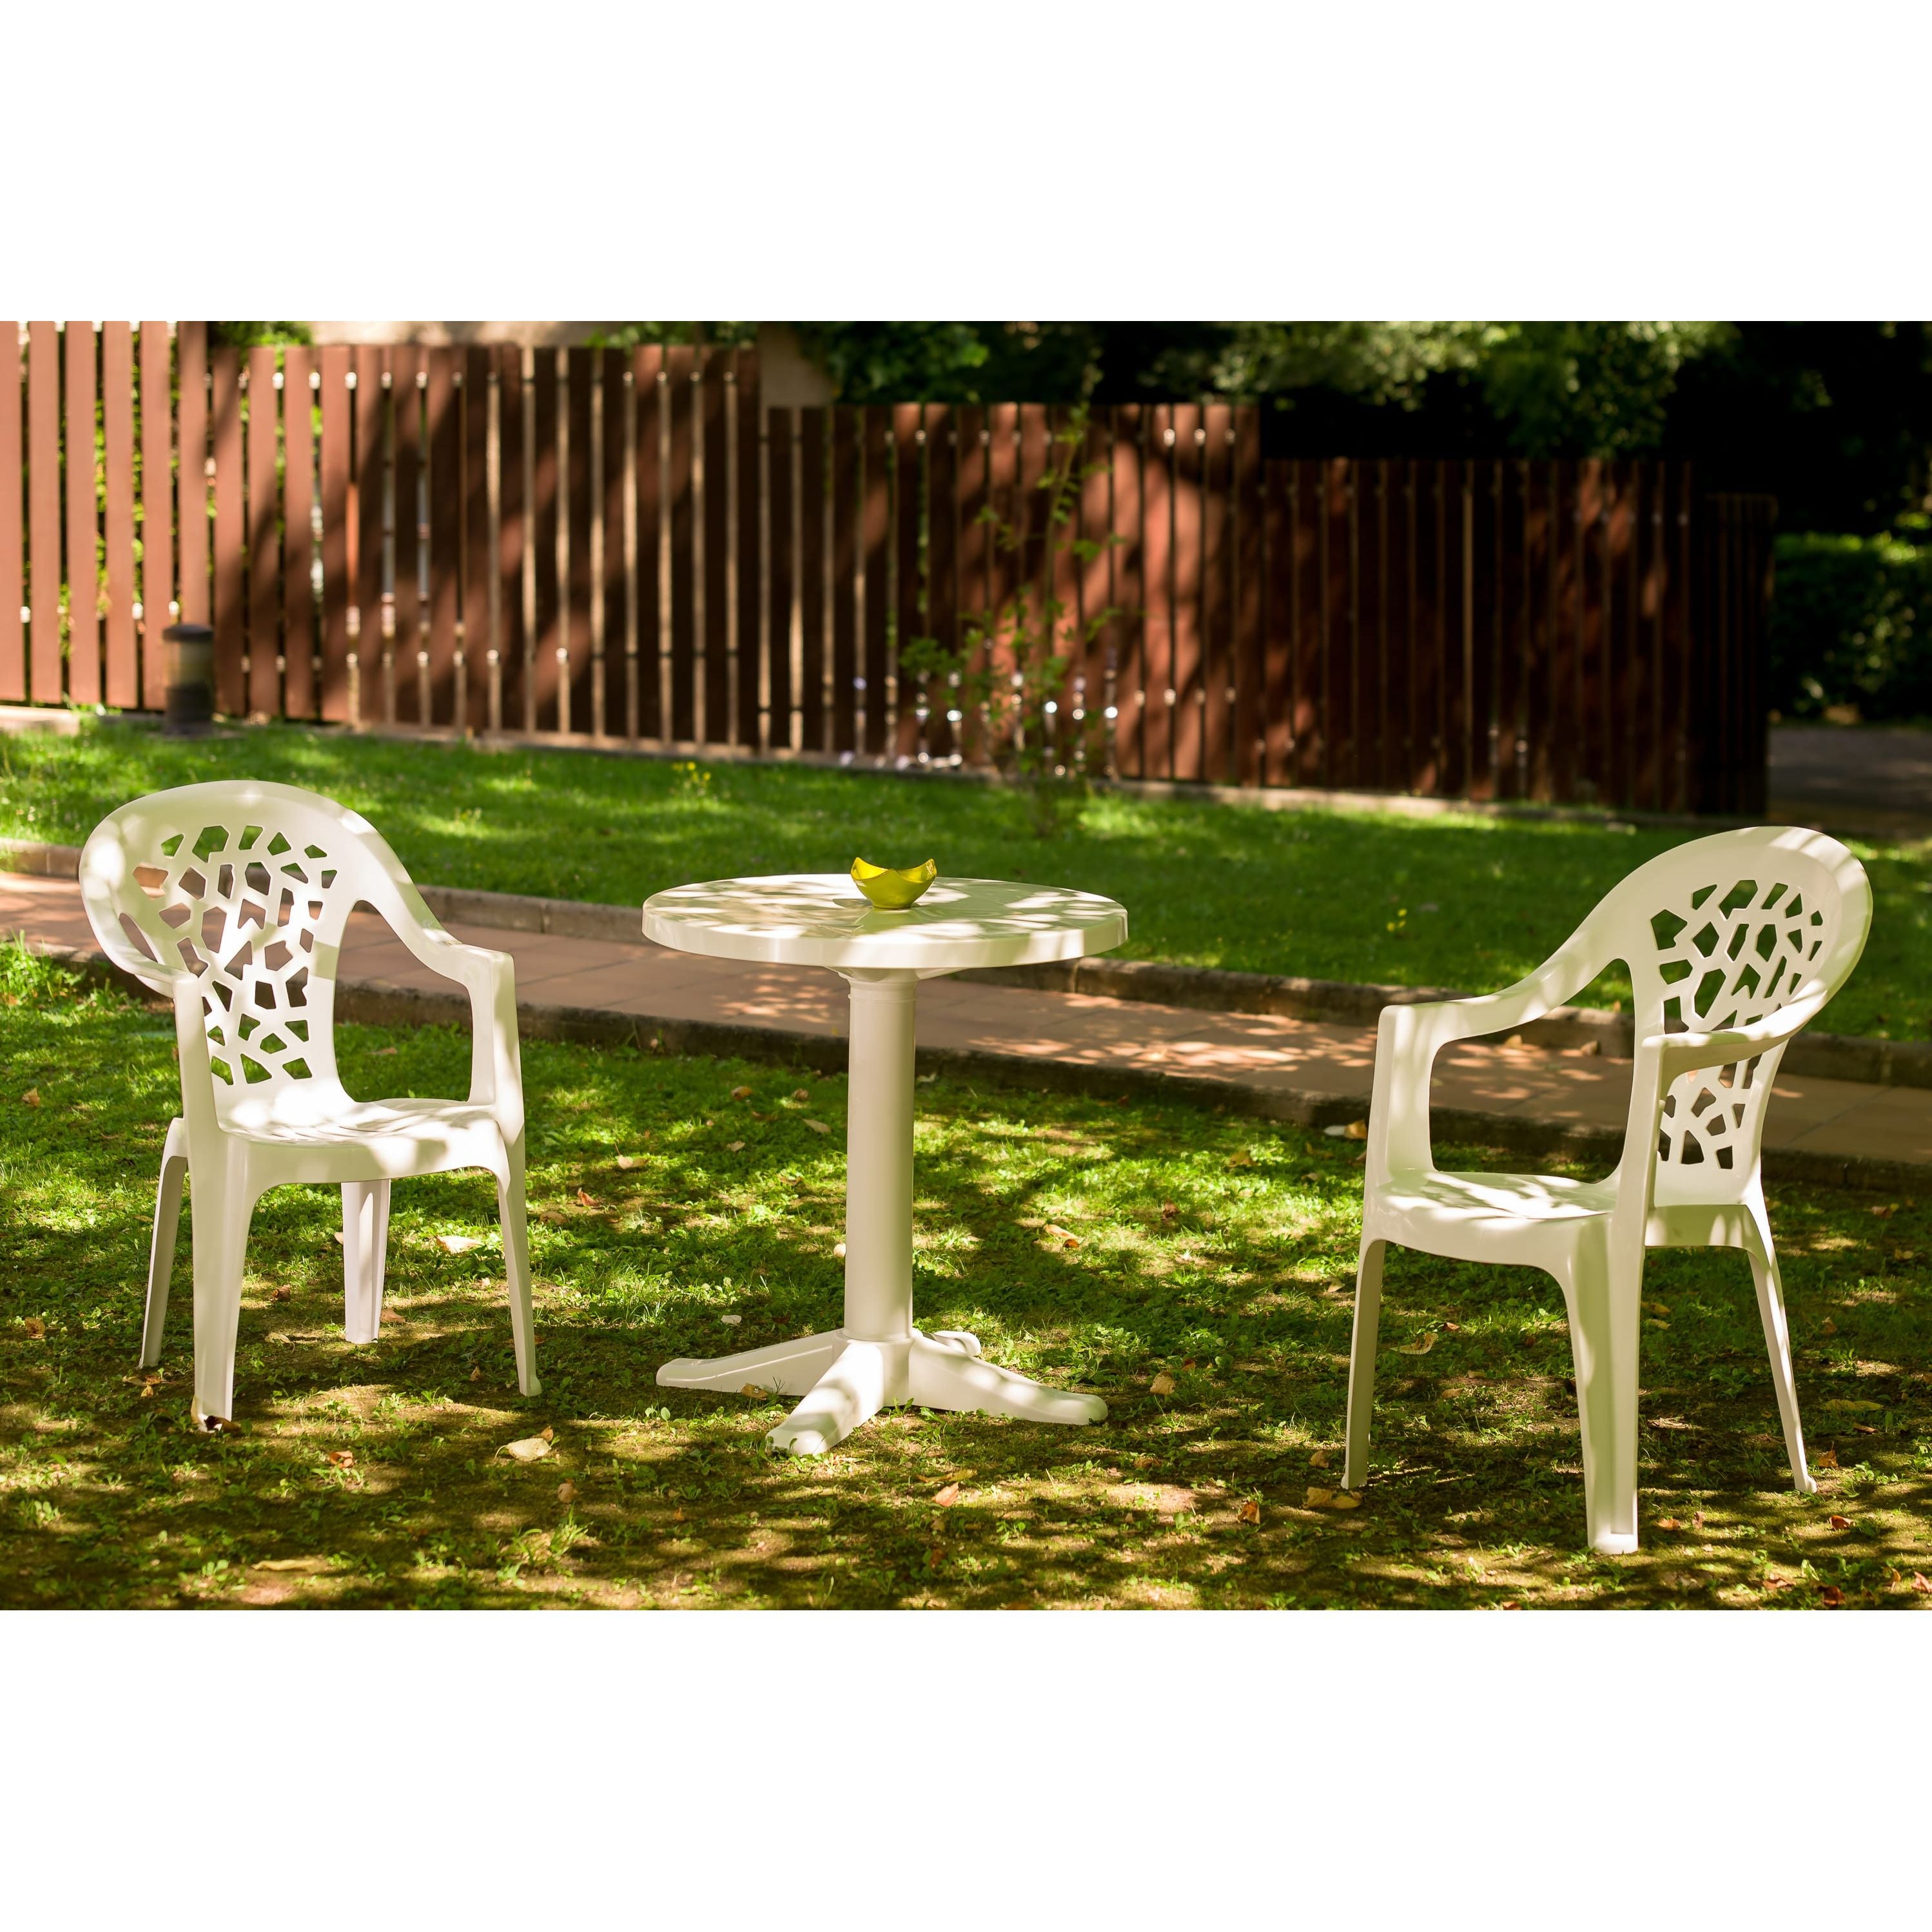 Garbar esculapi round table outdoor Ø70 white